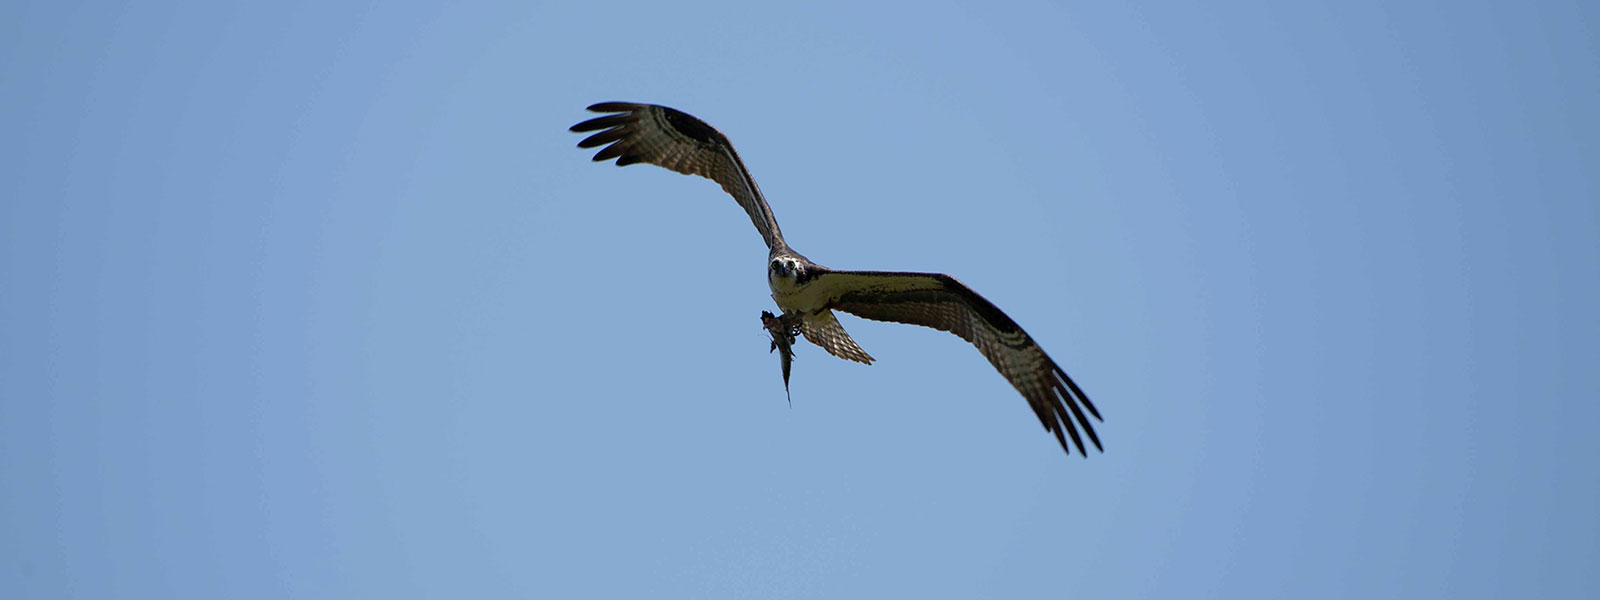 An Osprey with a fresh catch